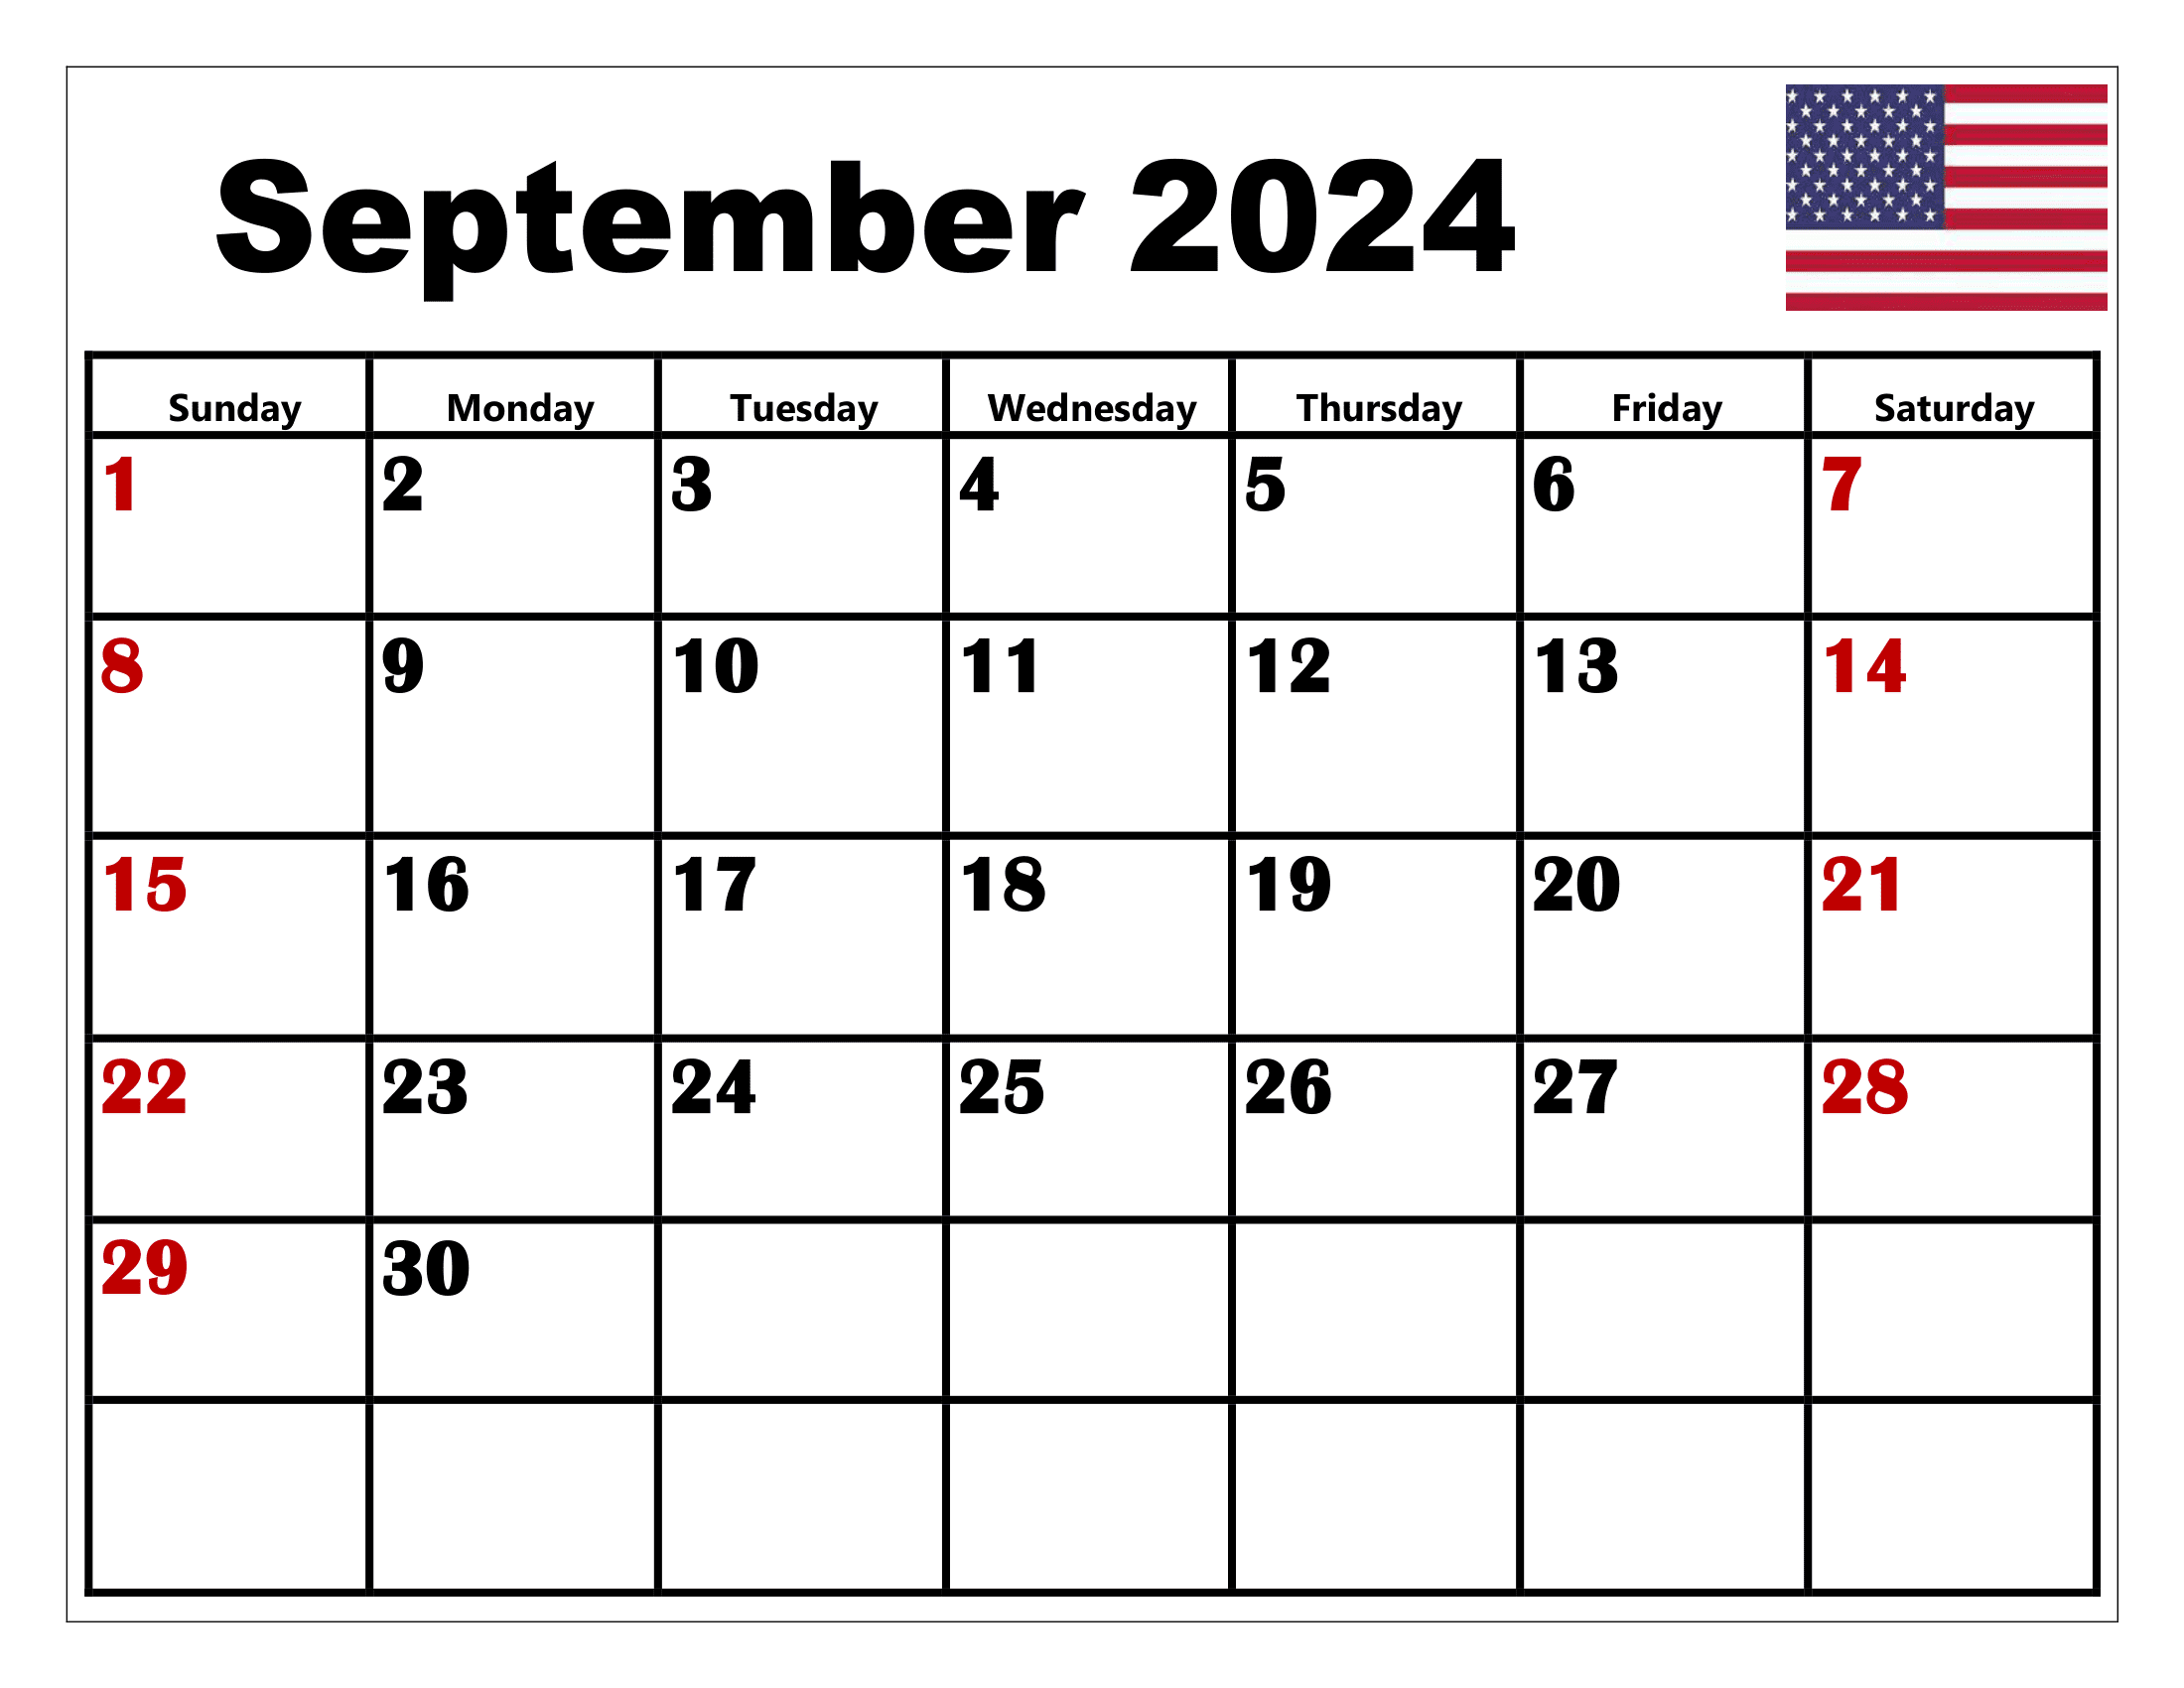 September 2024 Calendar Printable Pdf With Holidays for September 2024 Calendar Printable Free